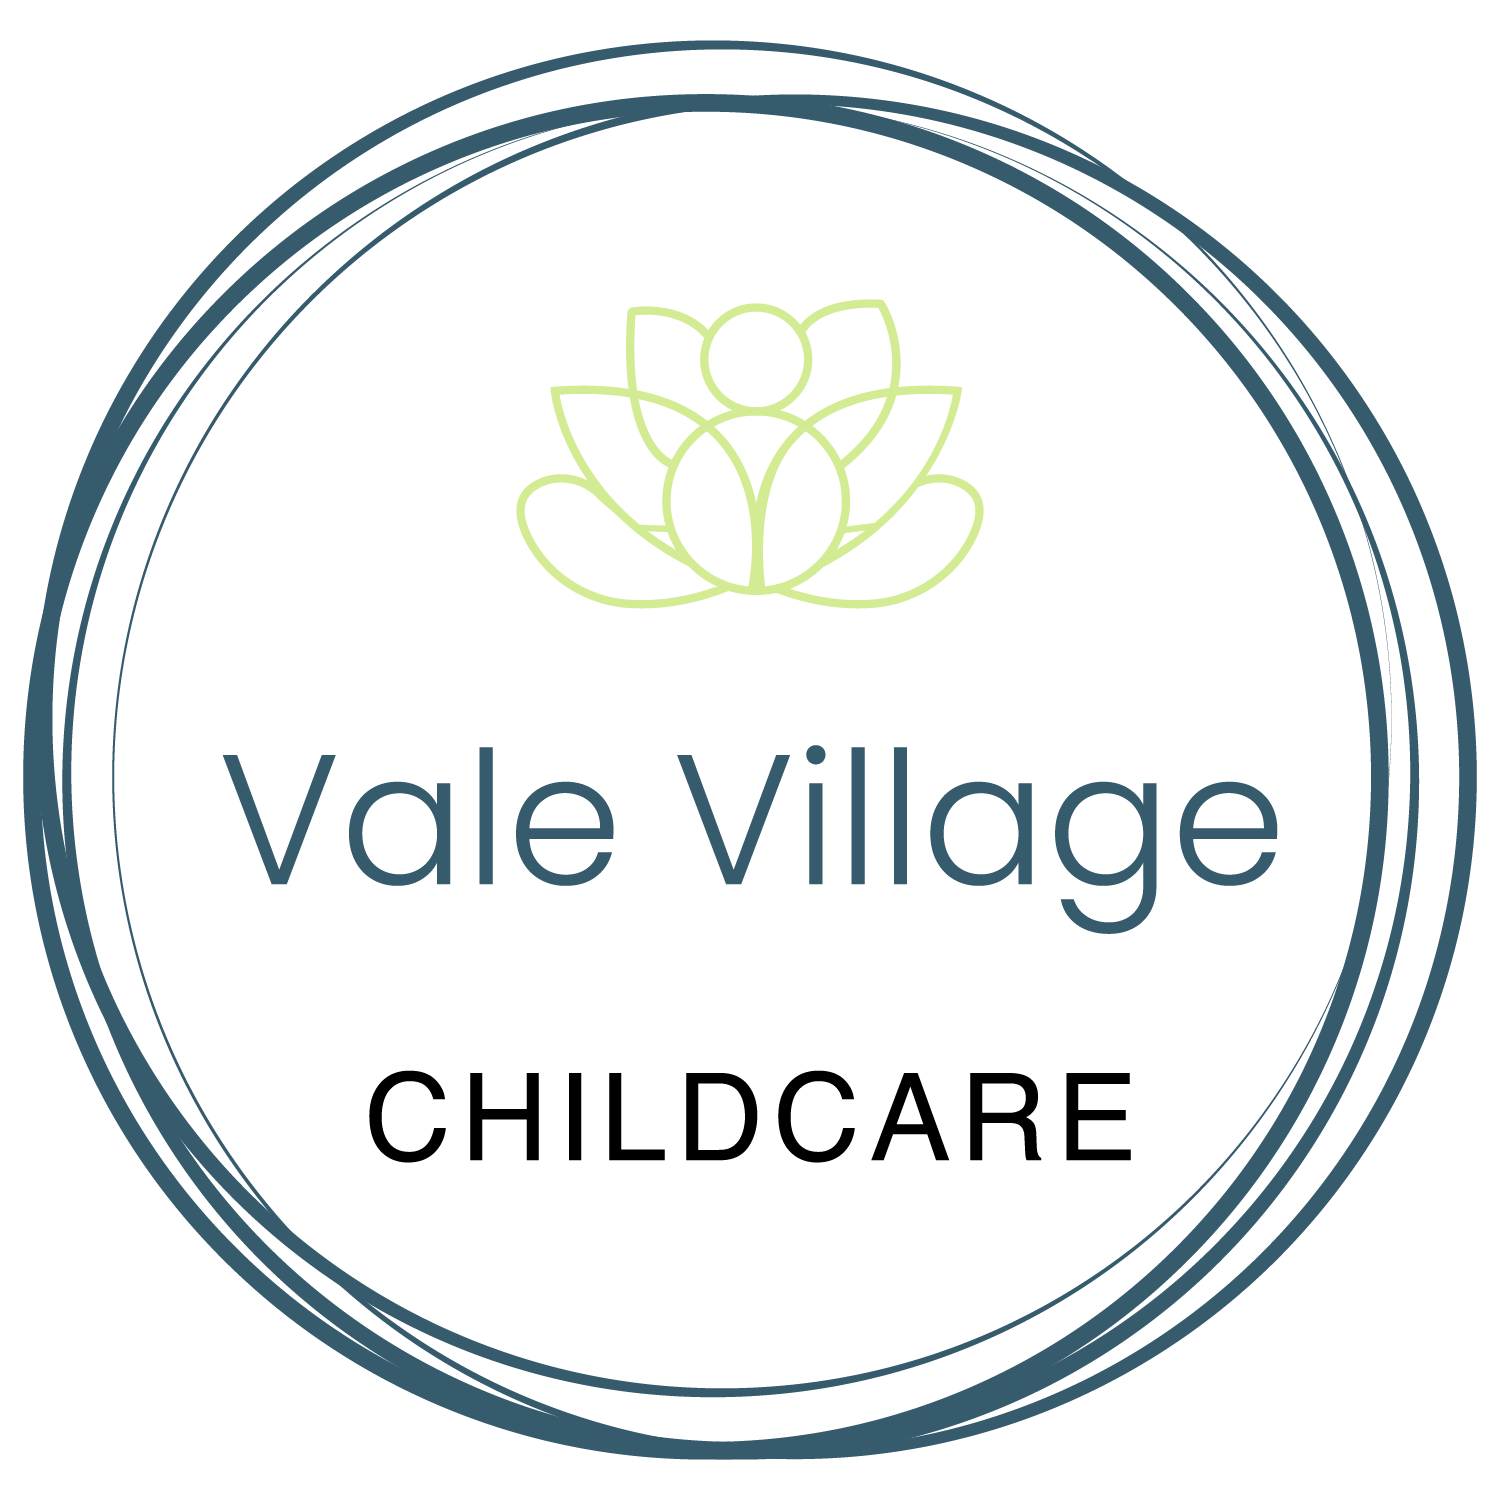 Vale Village Childcare